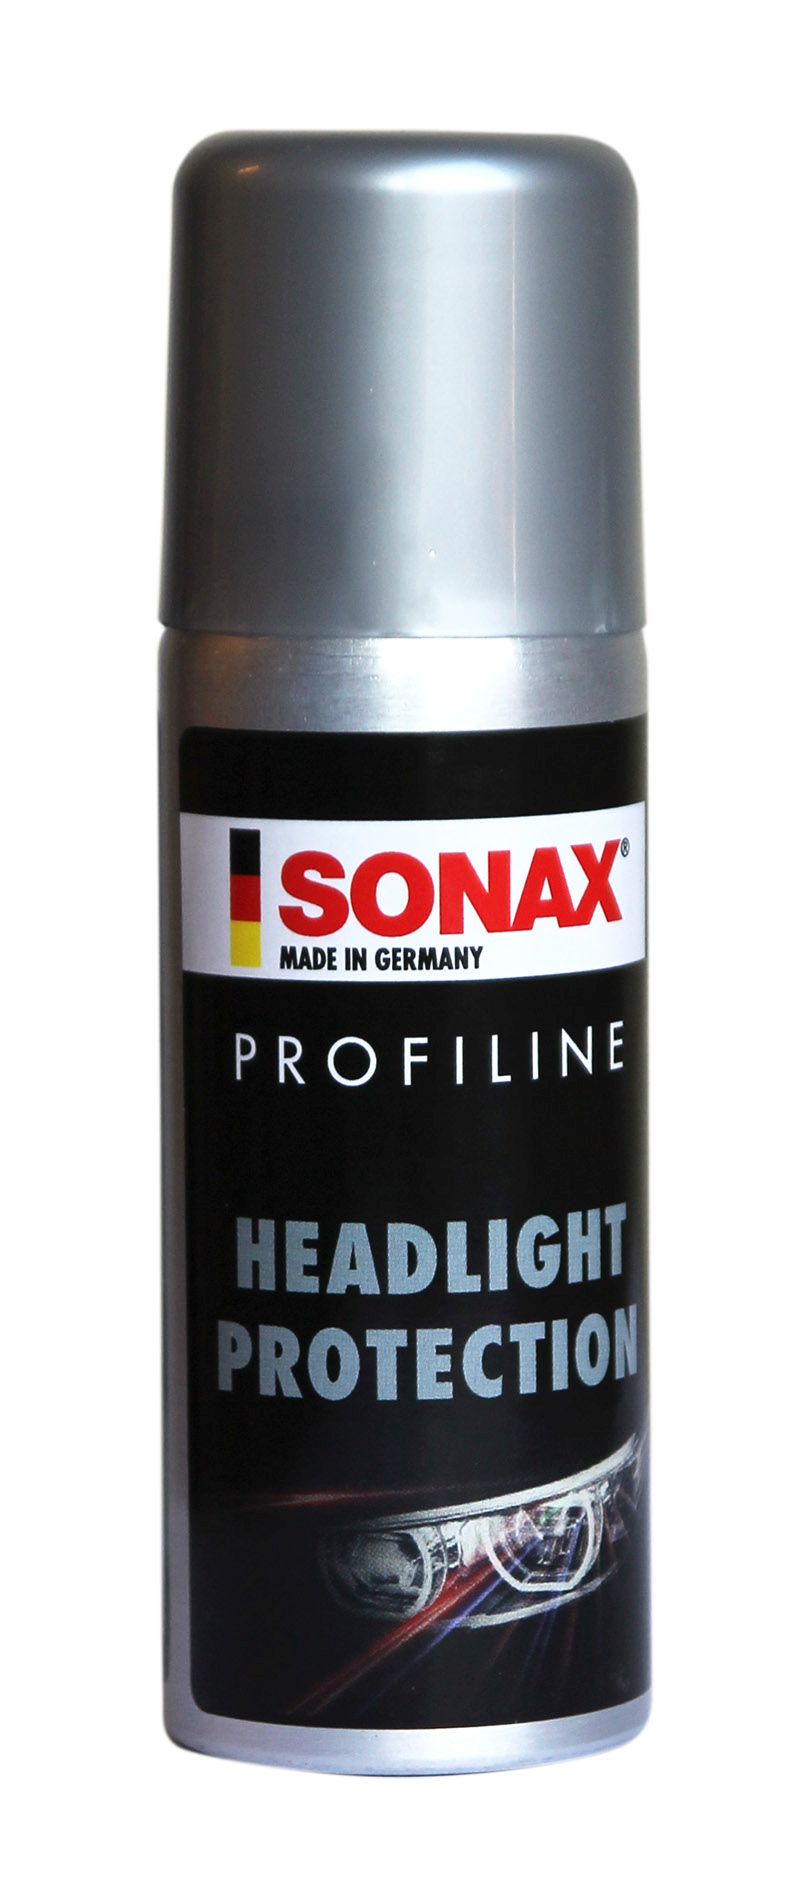 Sonax headlight proteciotn